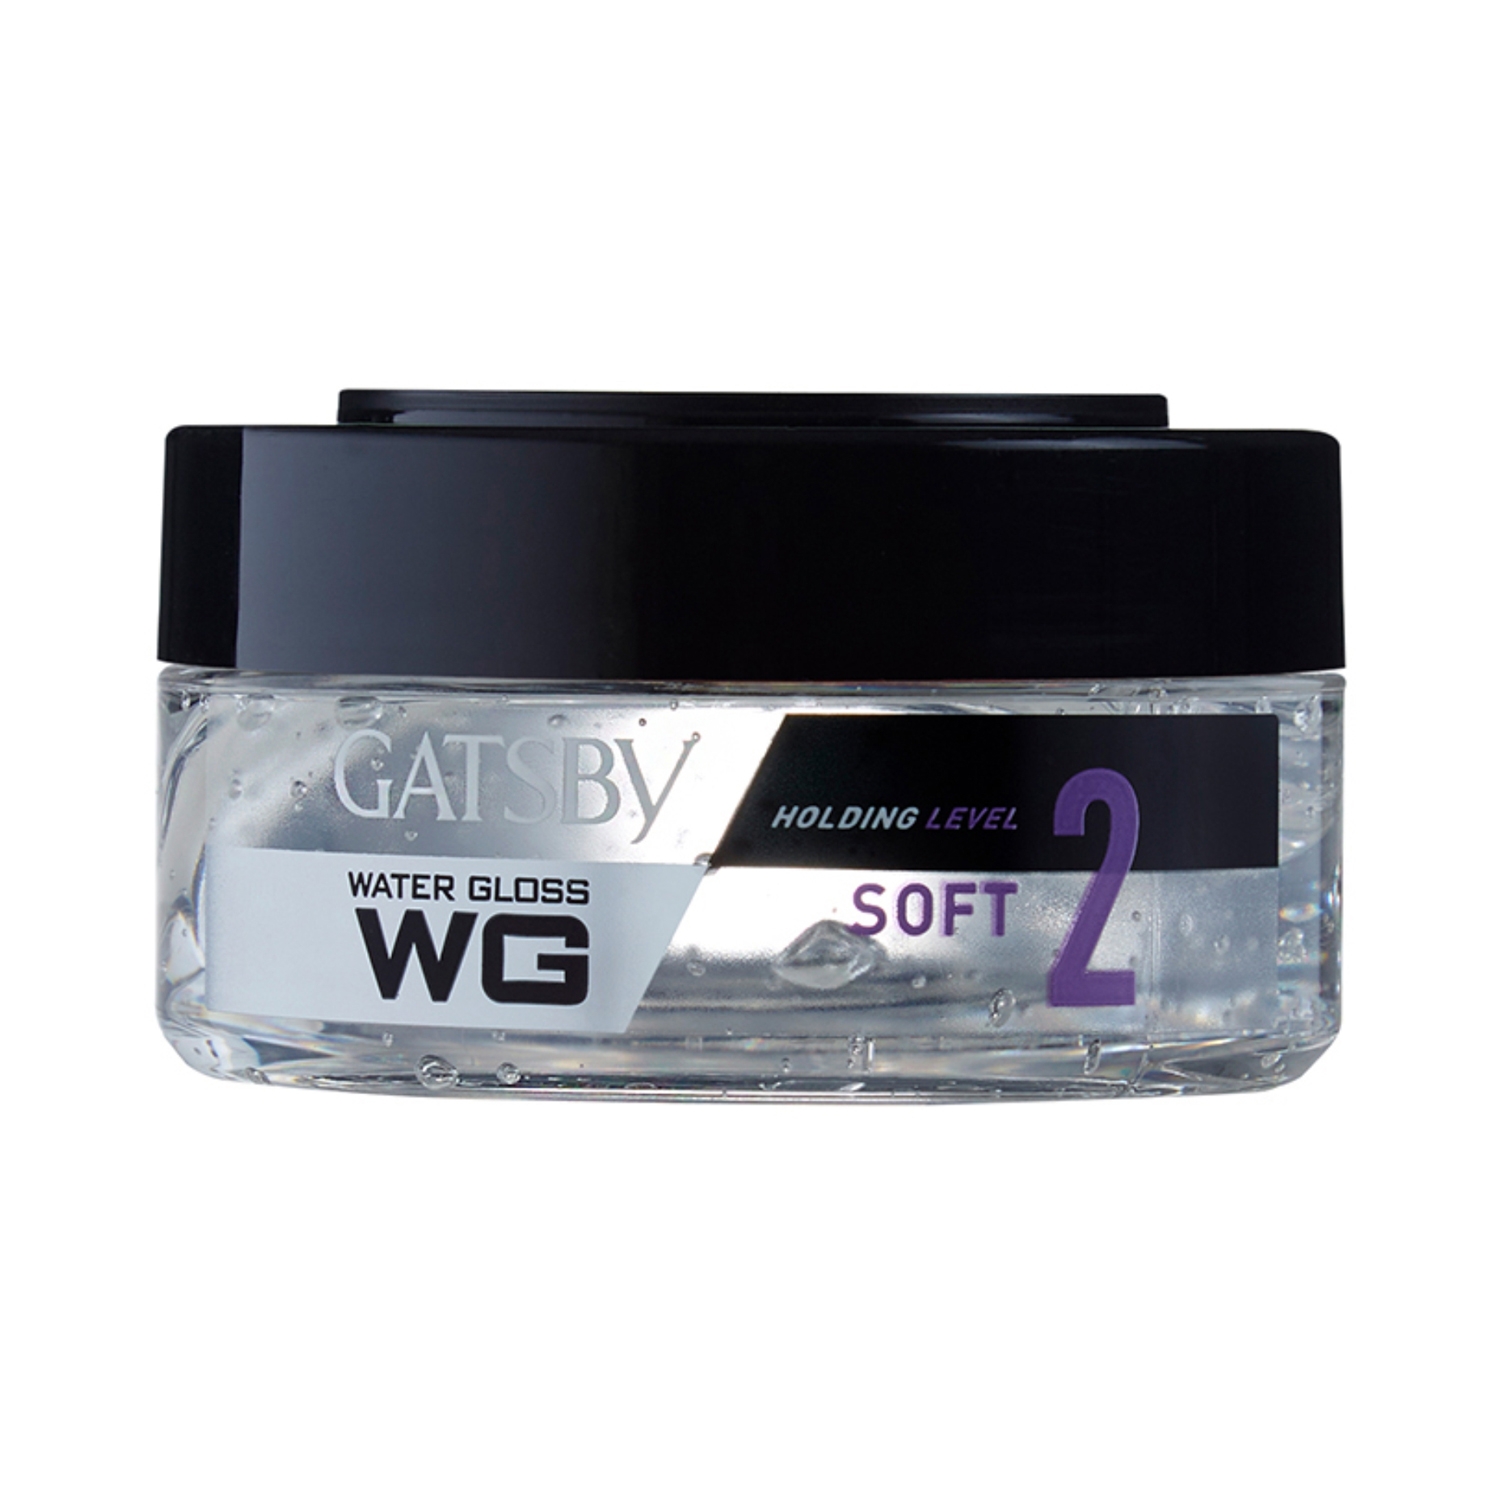 Gatsby Water Gloss Soft Gel (75g)